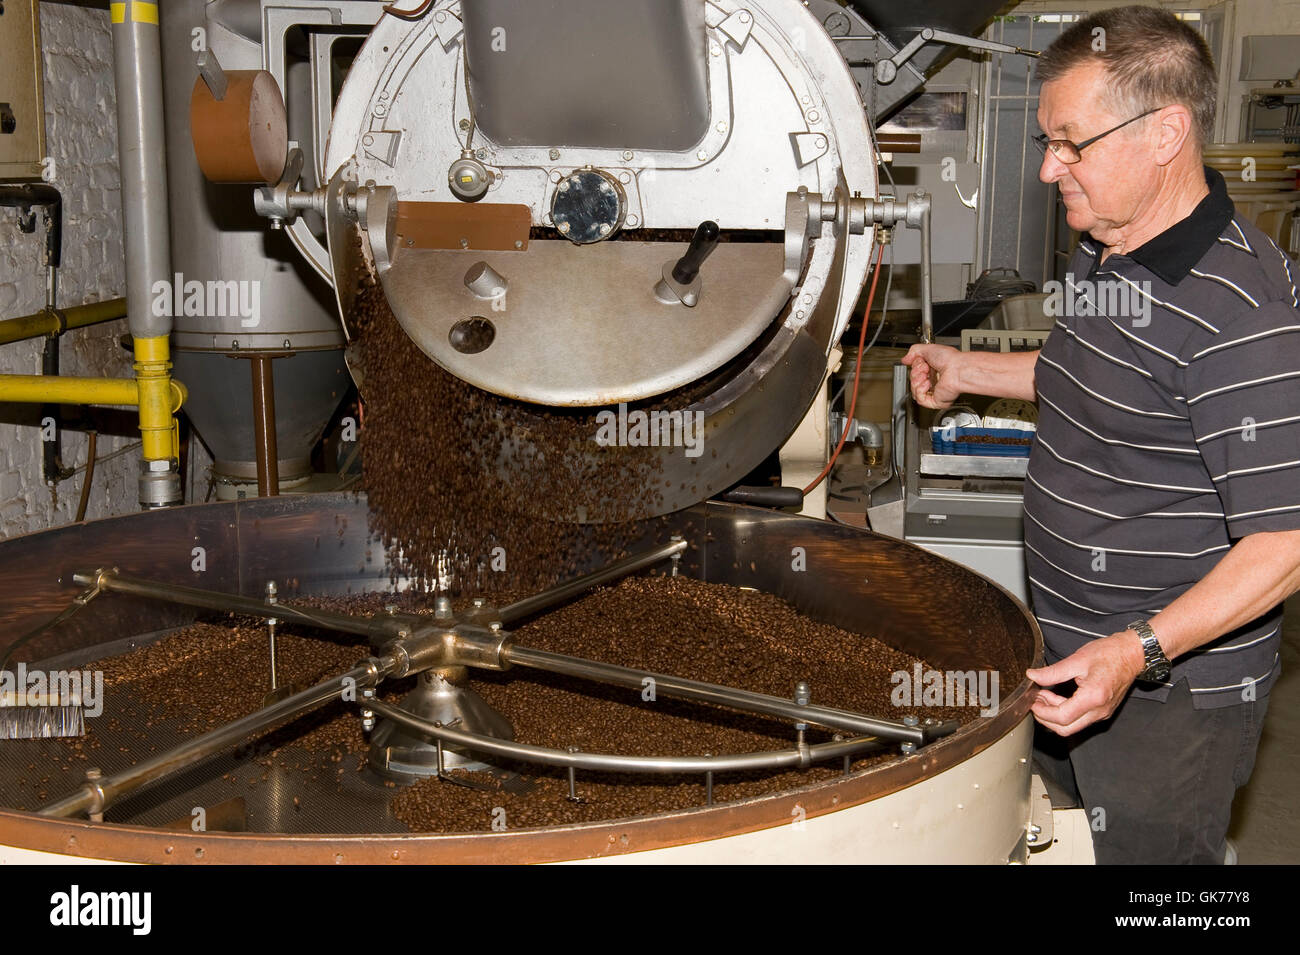 coffee coffee bean beans Stock Photo